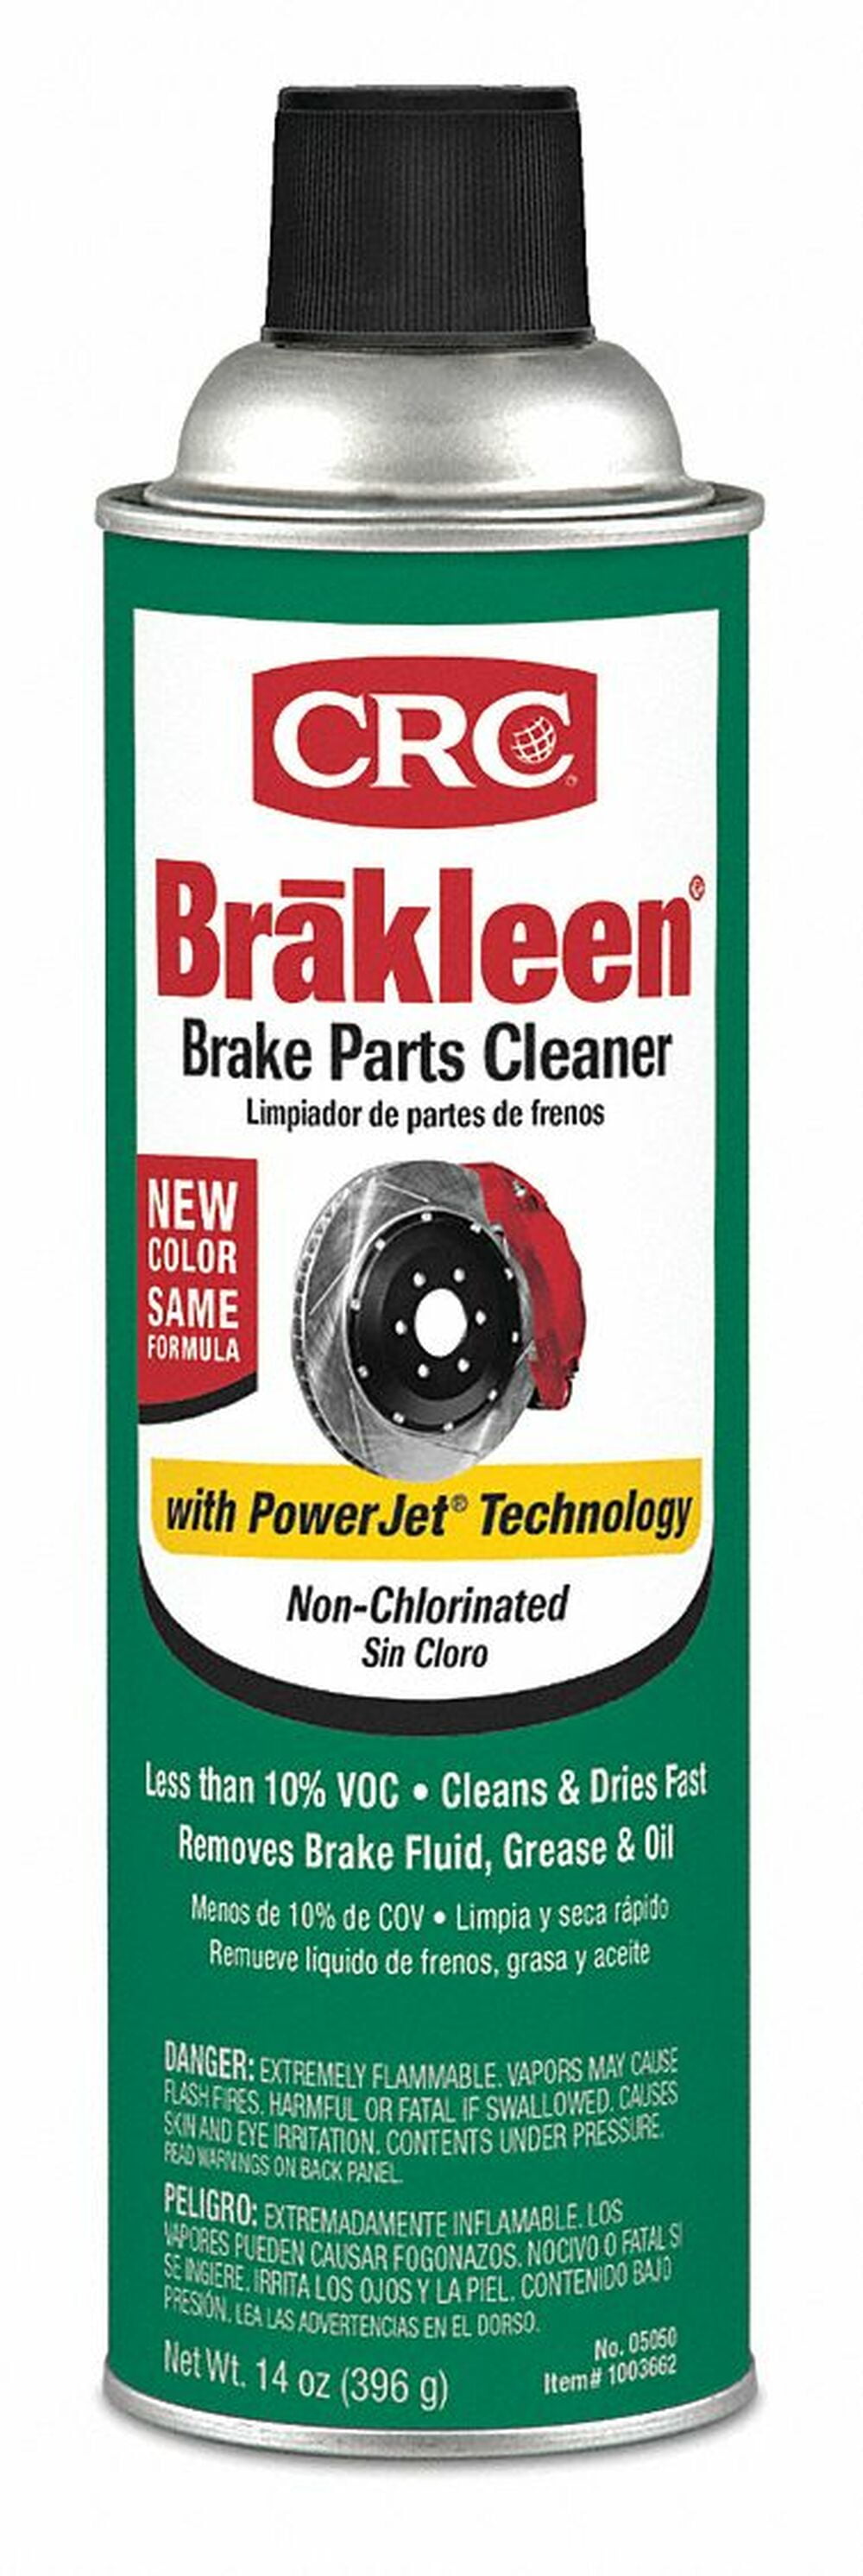 Zero VOC Brake And Parts Cleaner 5 Gallon